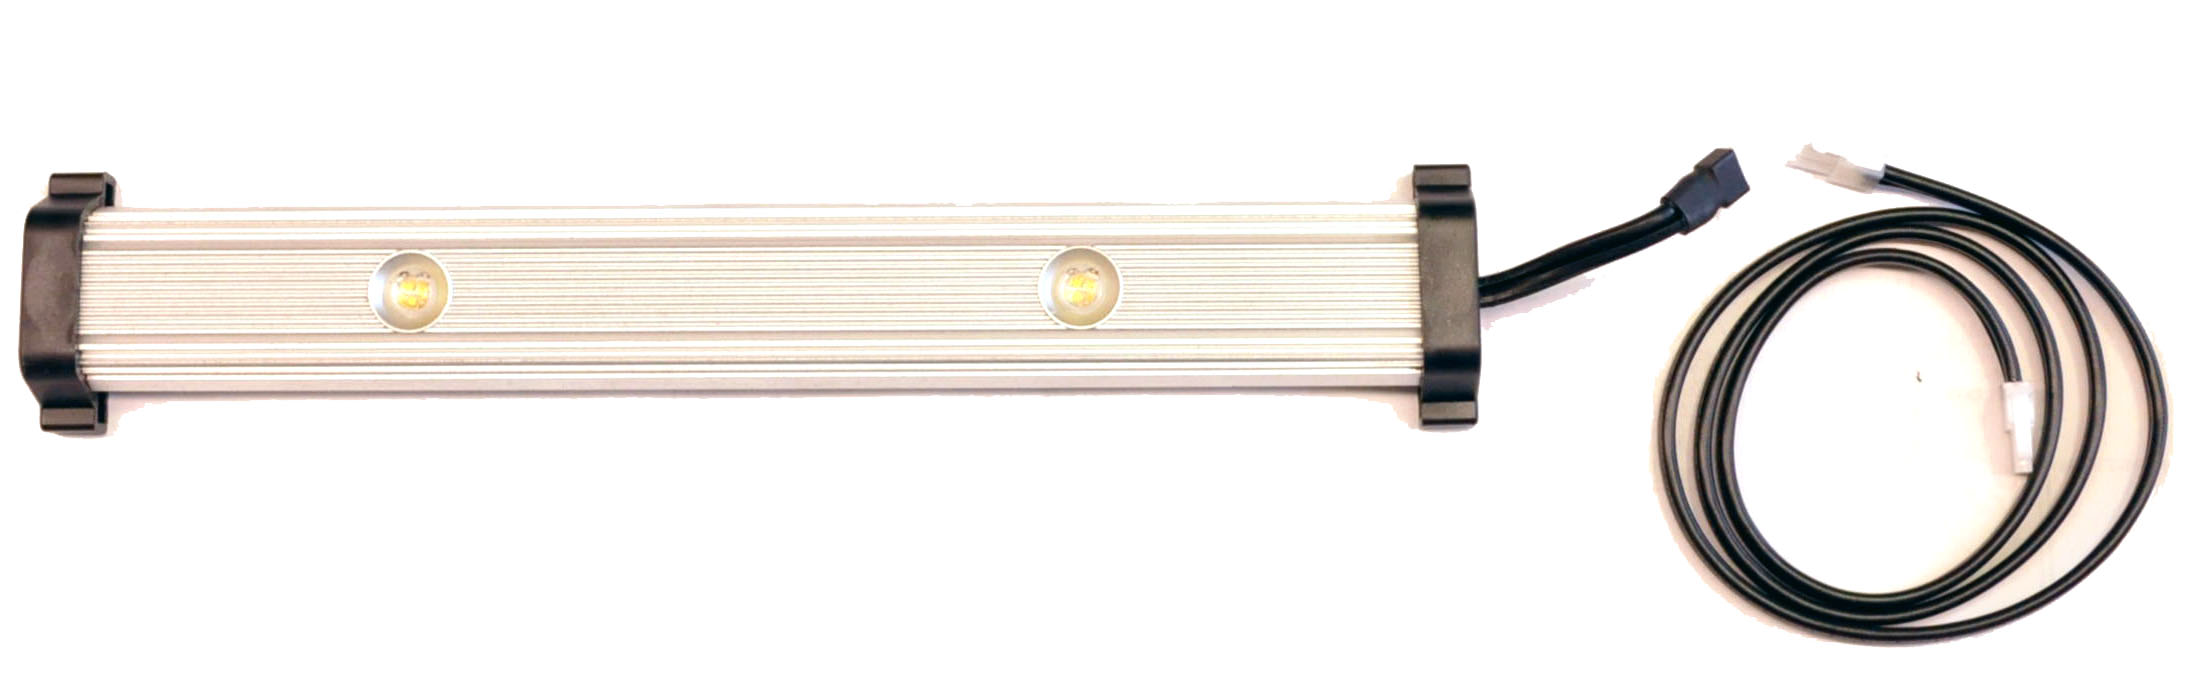 12W LED Underhood Light Strip (2 LEDs)